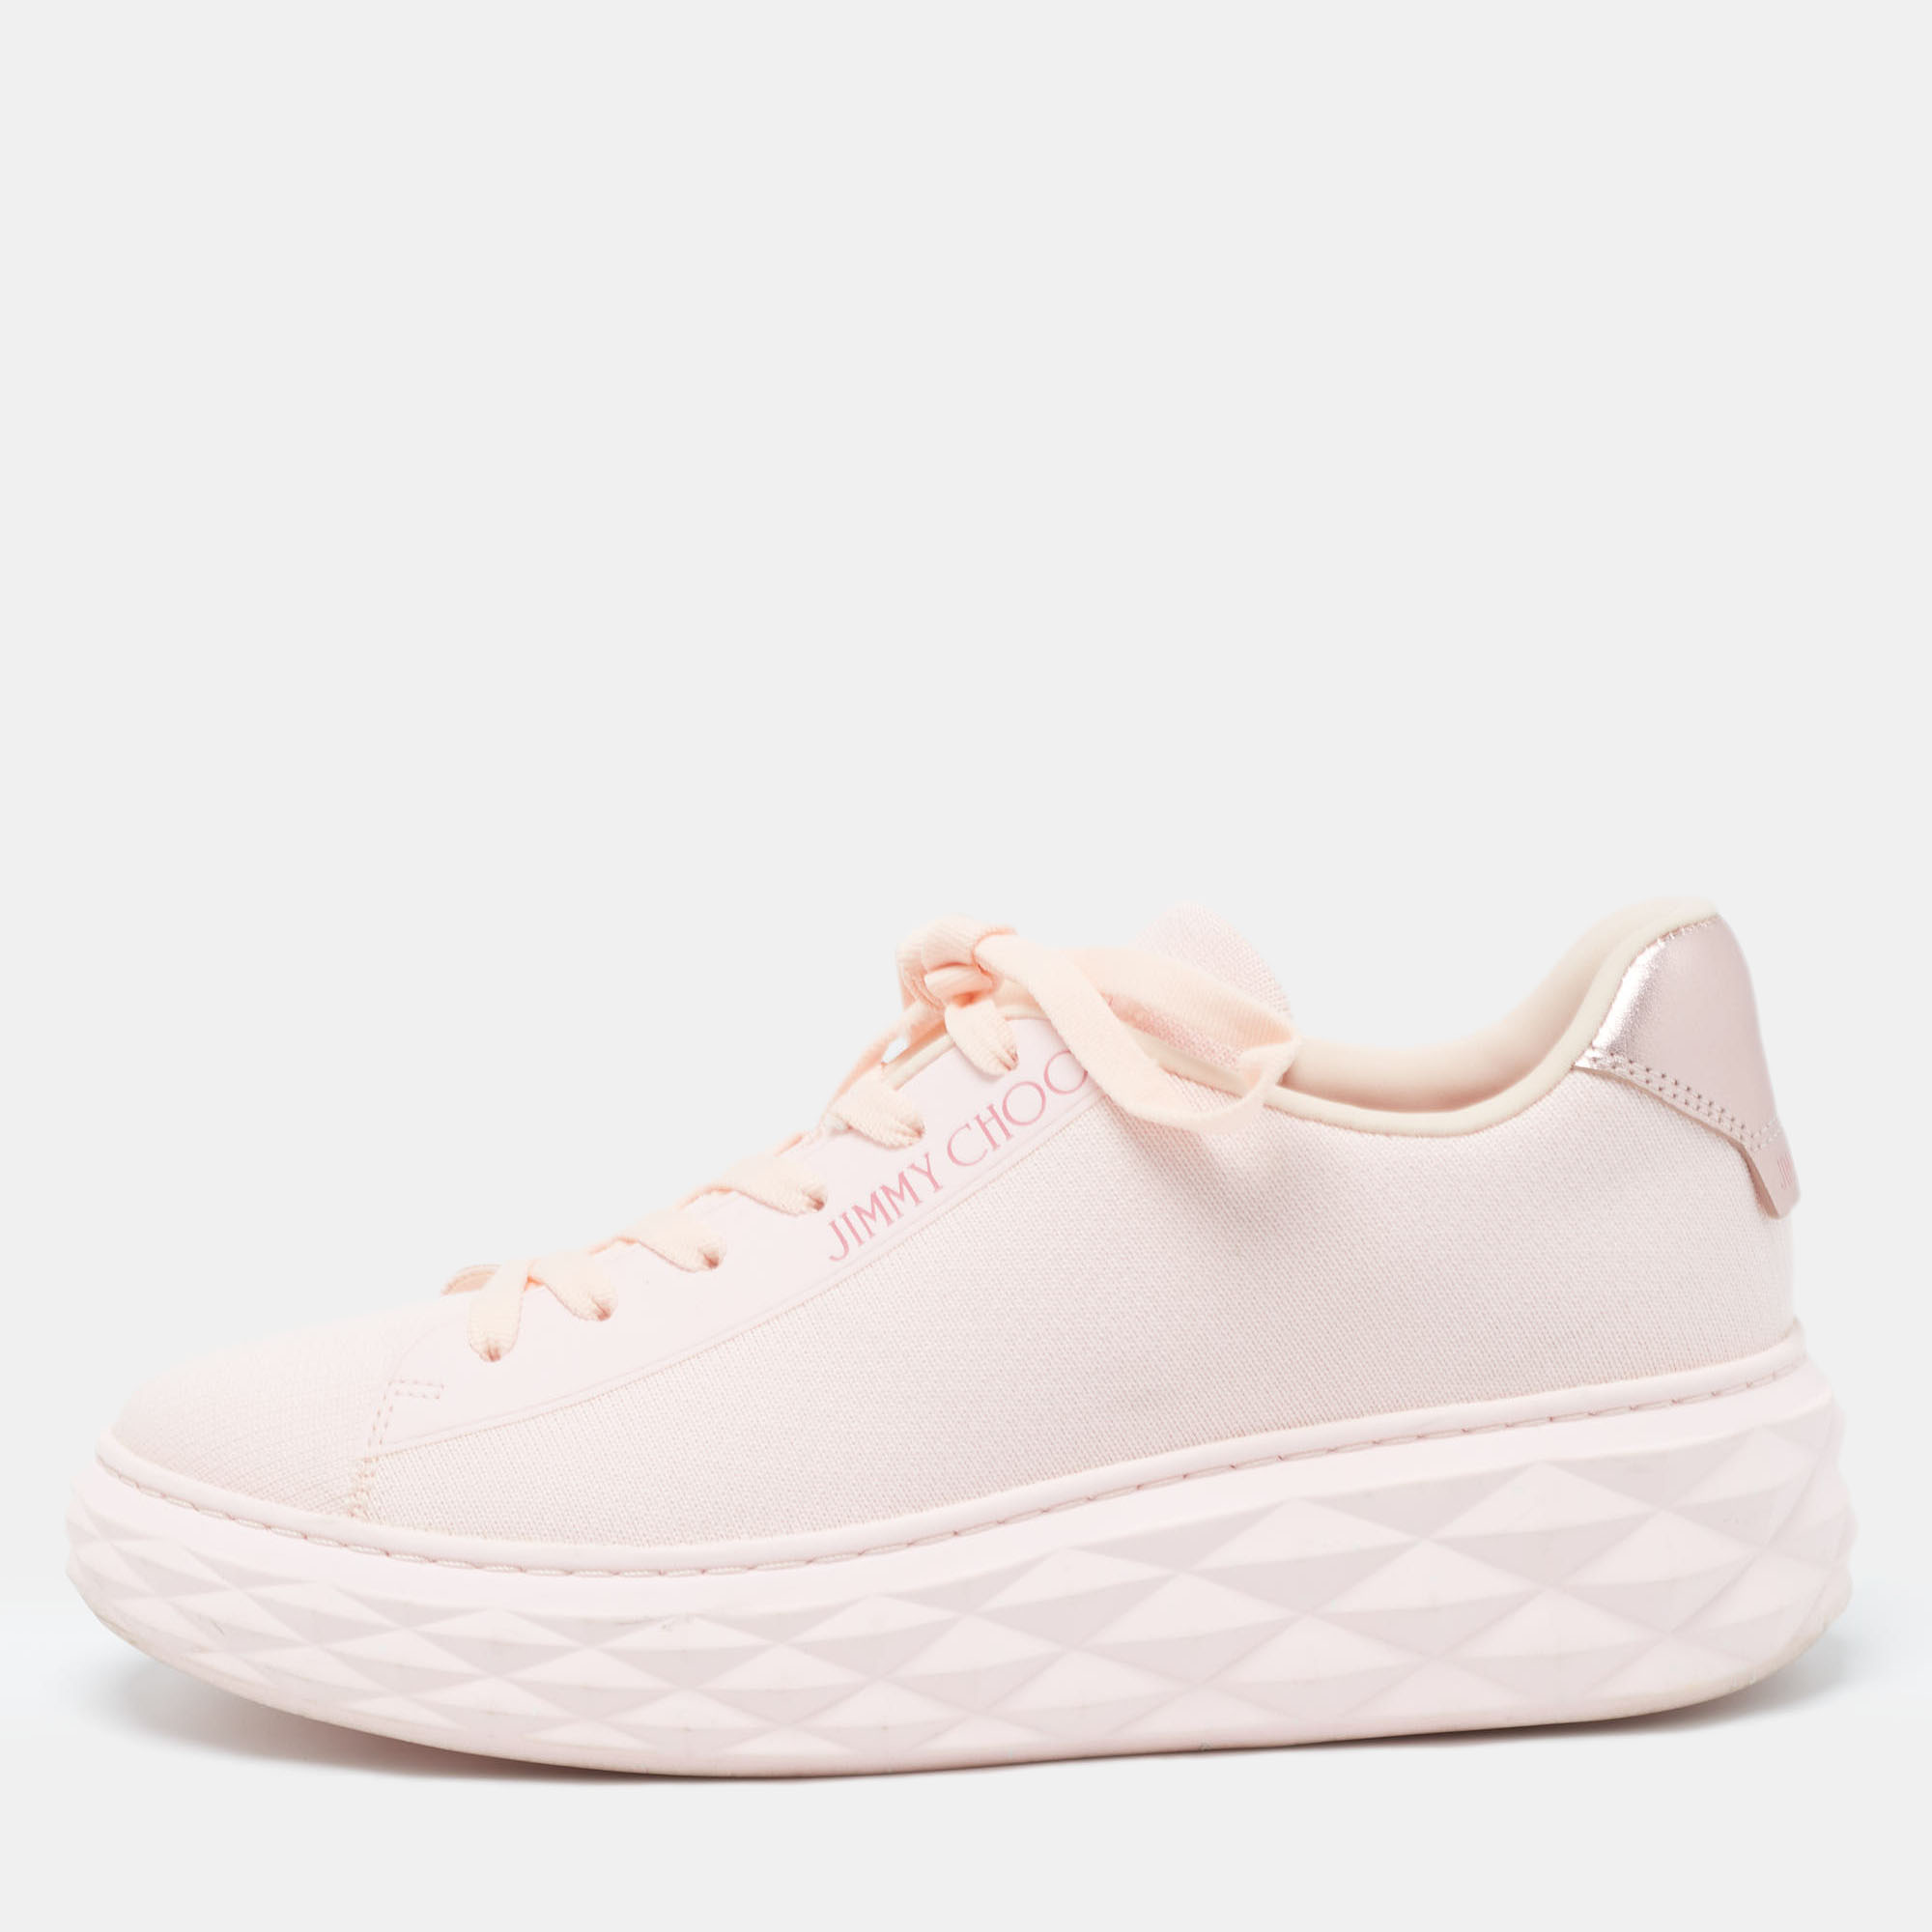 Jimmy choo pink knit fabric diamond light maxi sneakers size 40